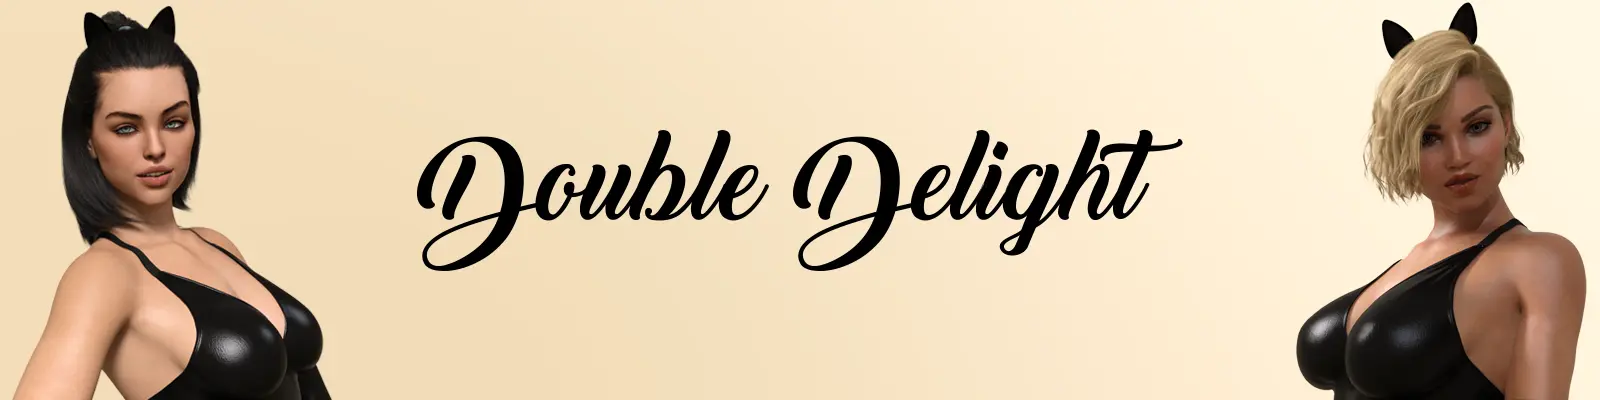 Double Delight [v0.1] main image